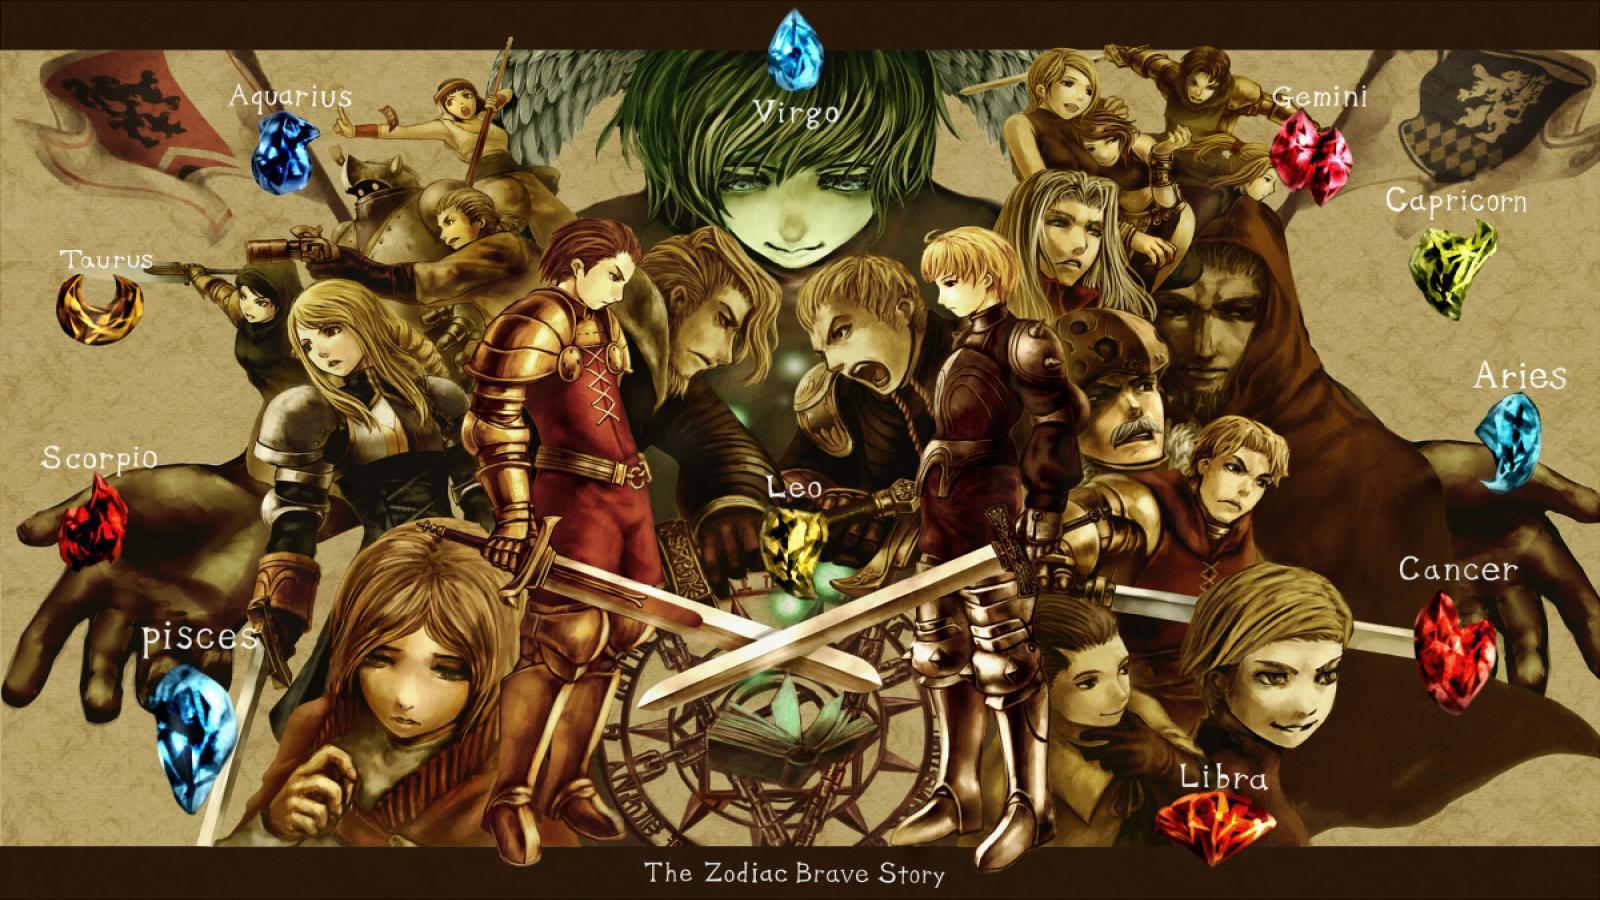 Final Fantasy Tactics wallpaper in 1152x768 resolution